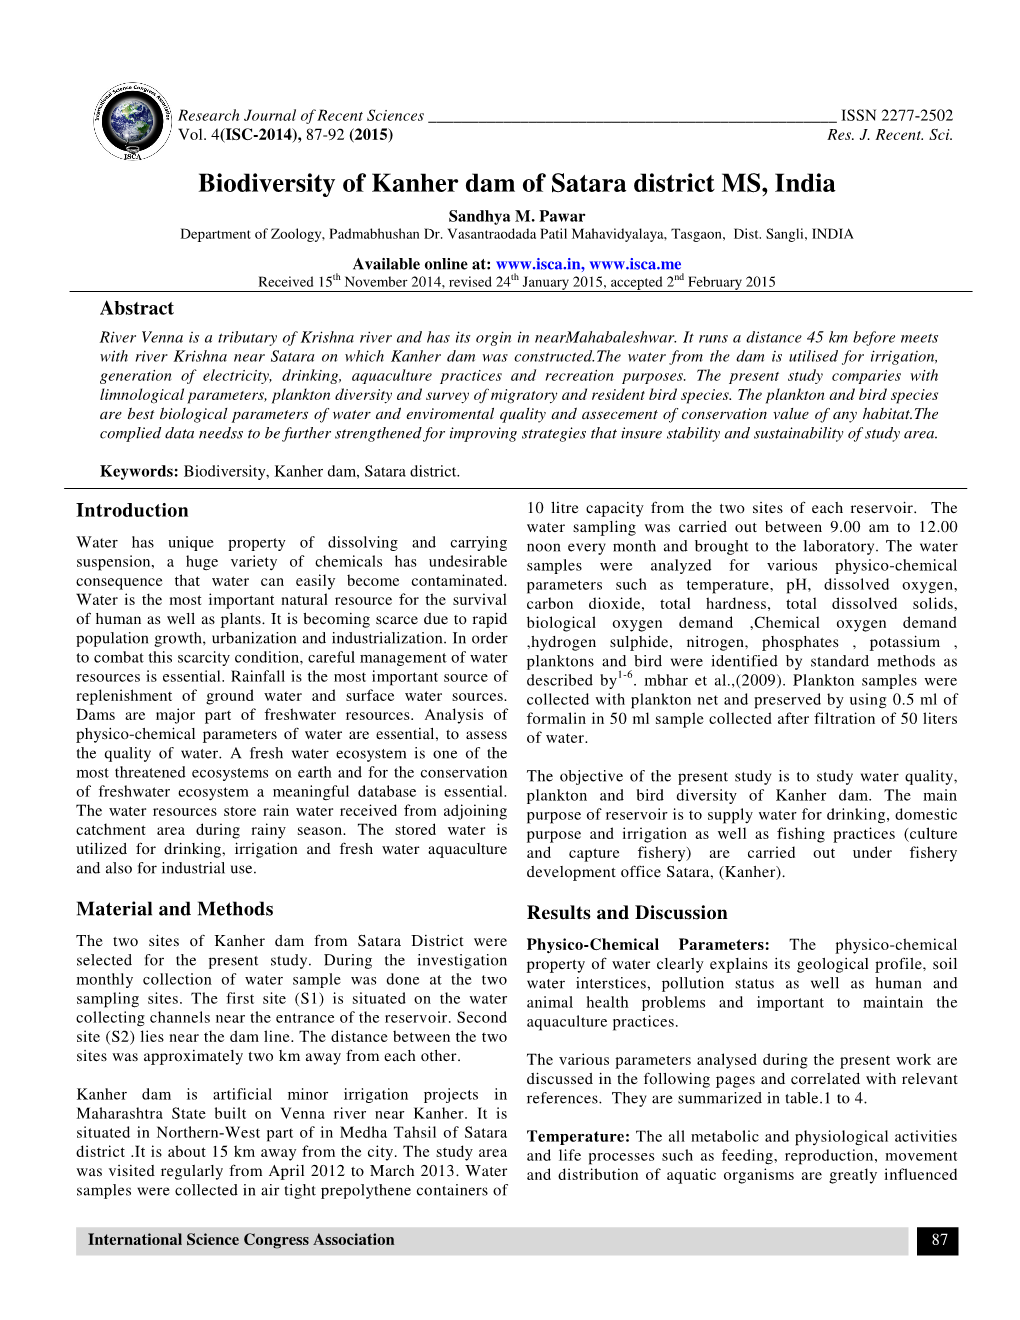 Biodiversity of Kanher Dam of Satara District MS, India Sandhya M